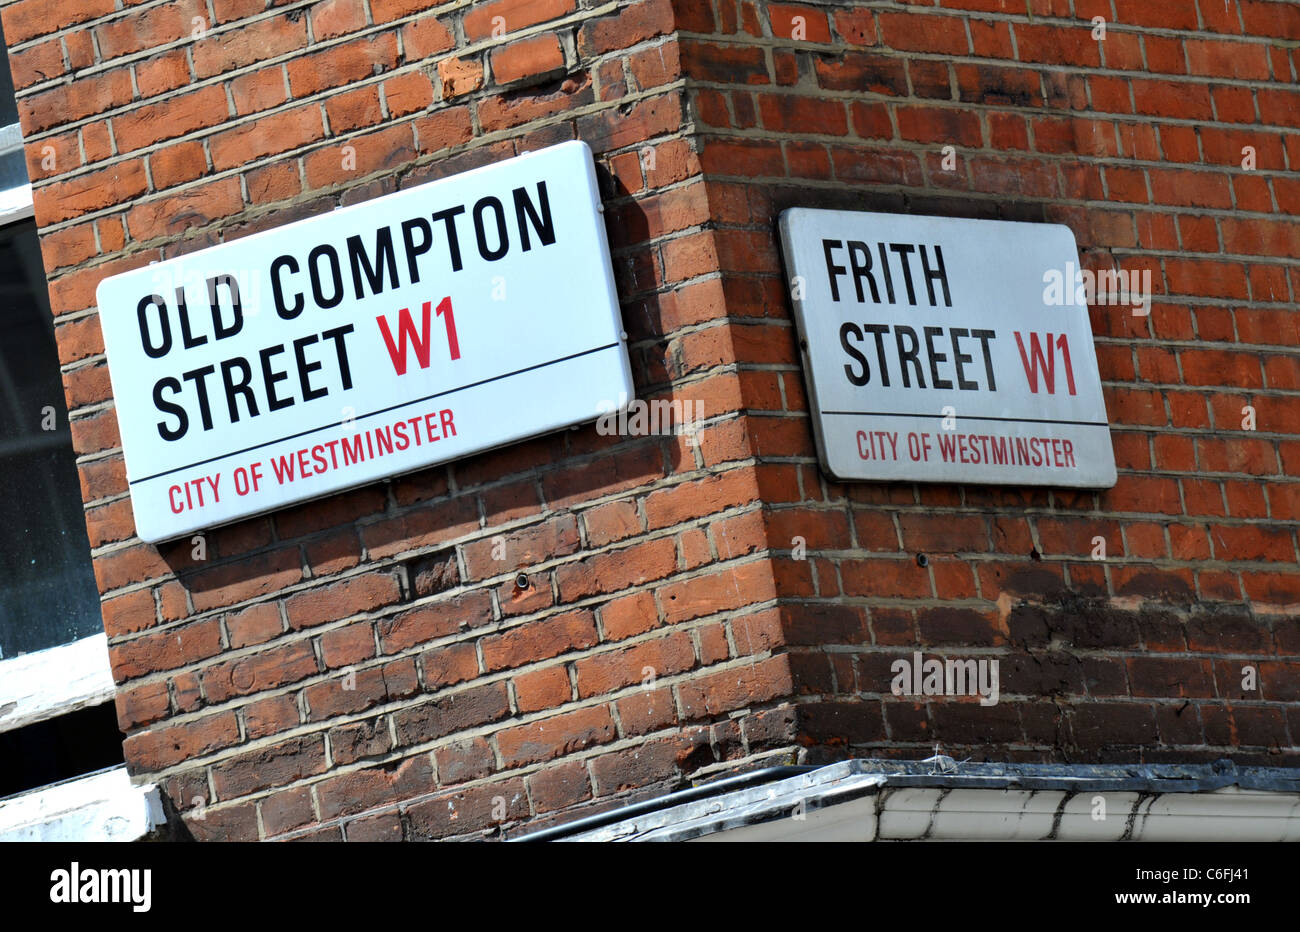 Frith Street et Old Compton Street, Soho, signes, la Grande-Bretagne Londres, Royaume-Uni Banque D'Images